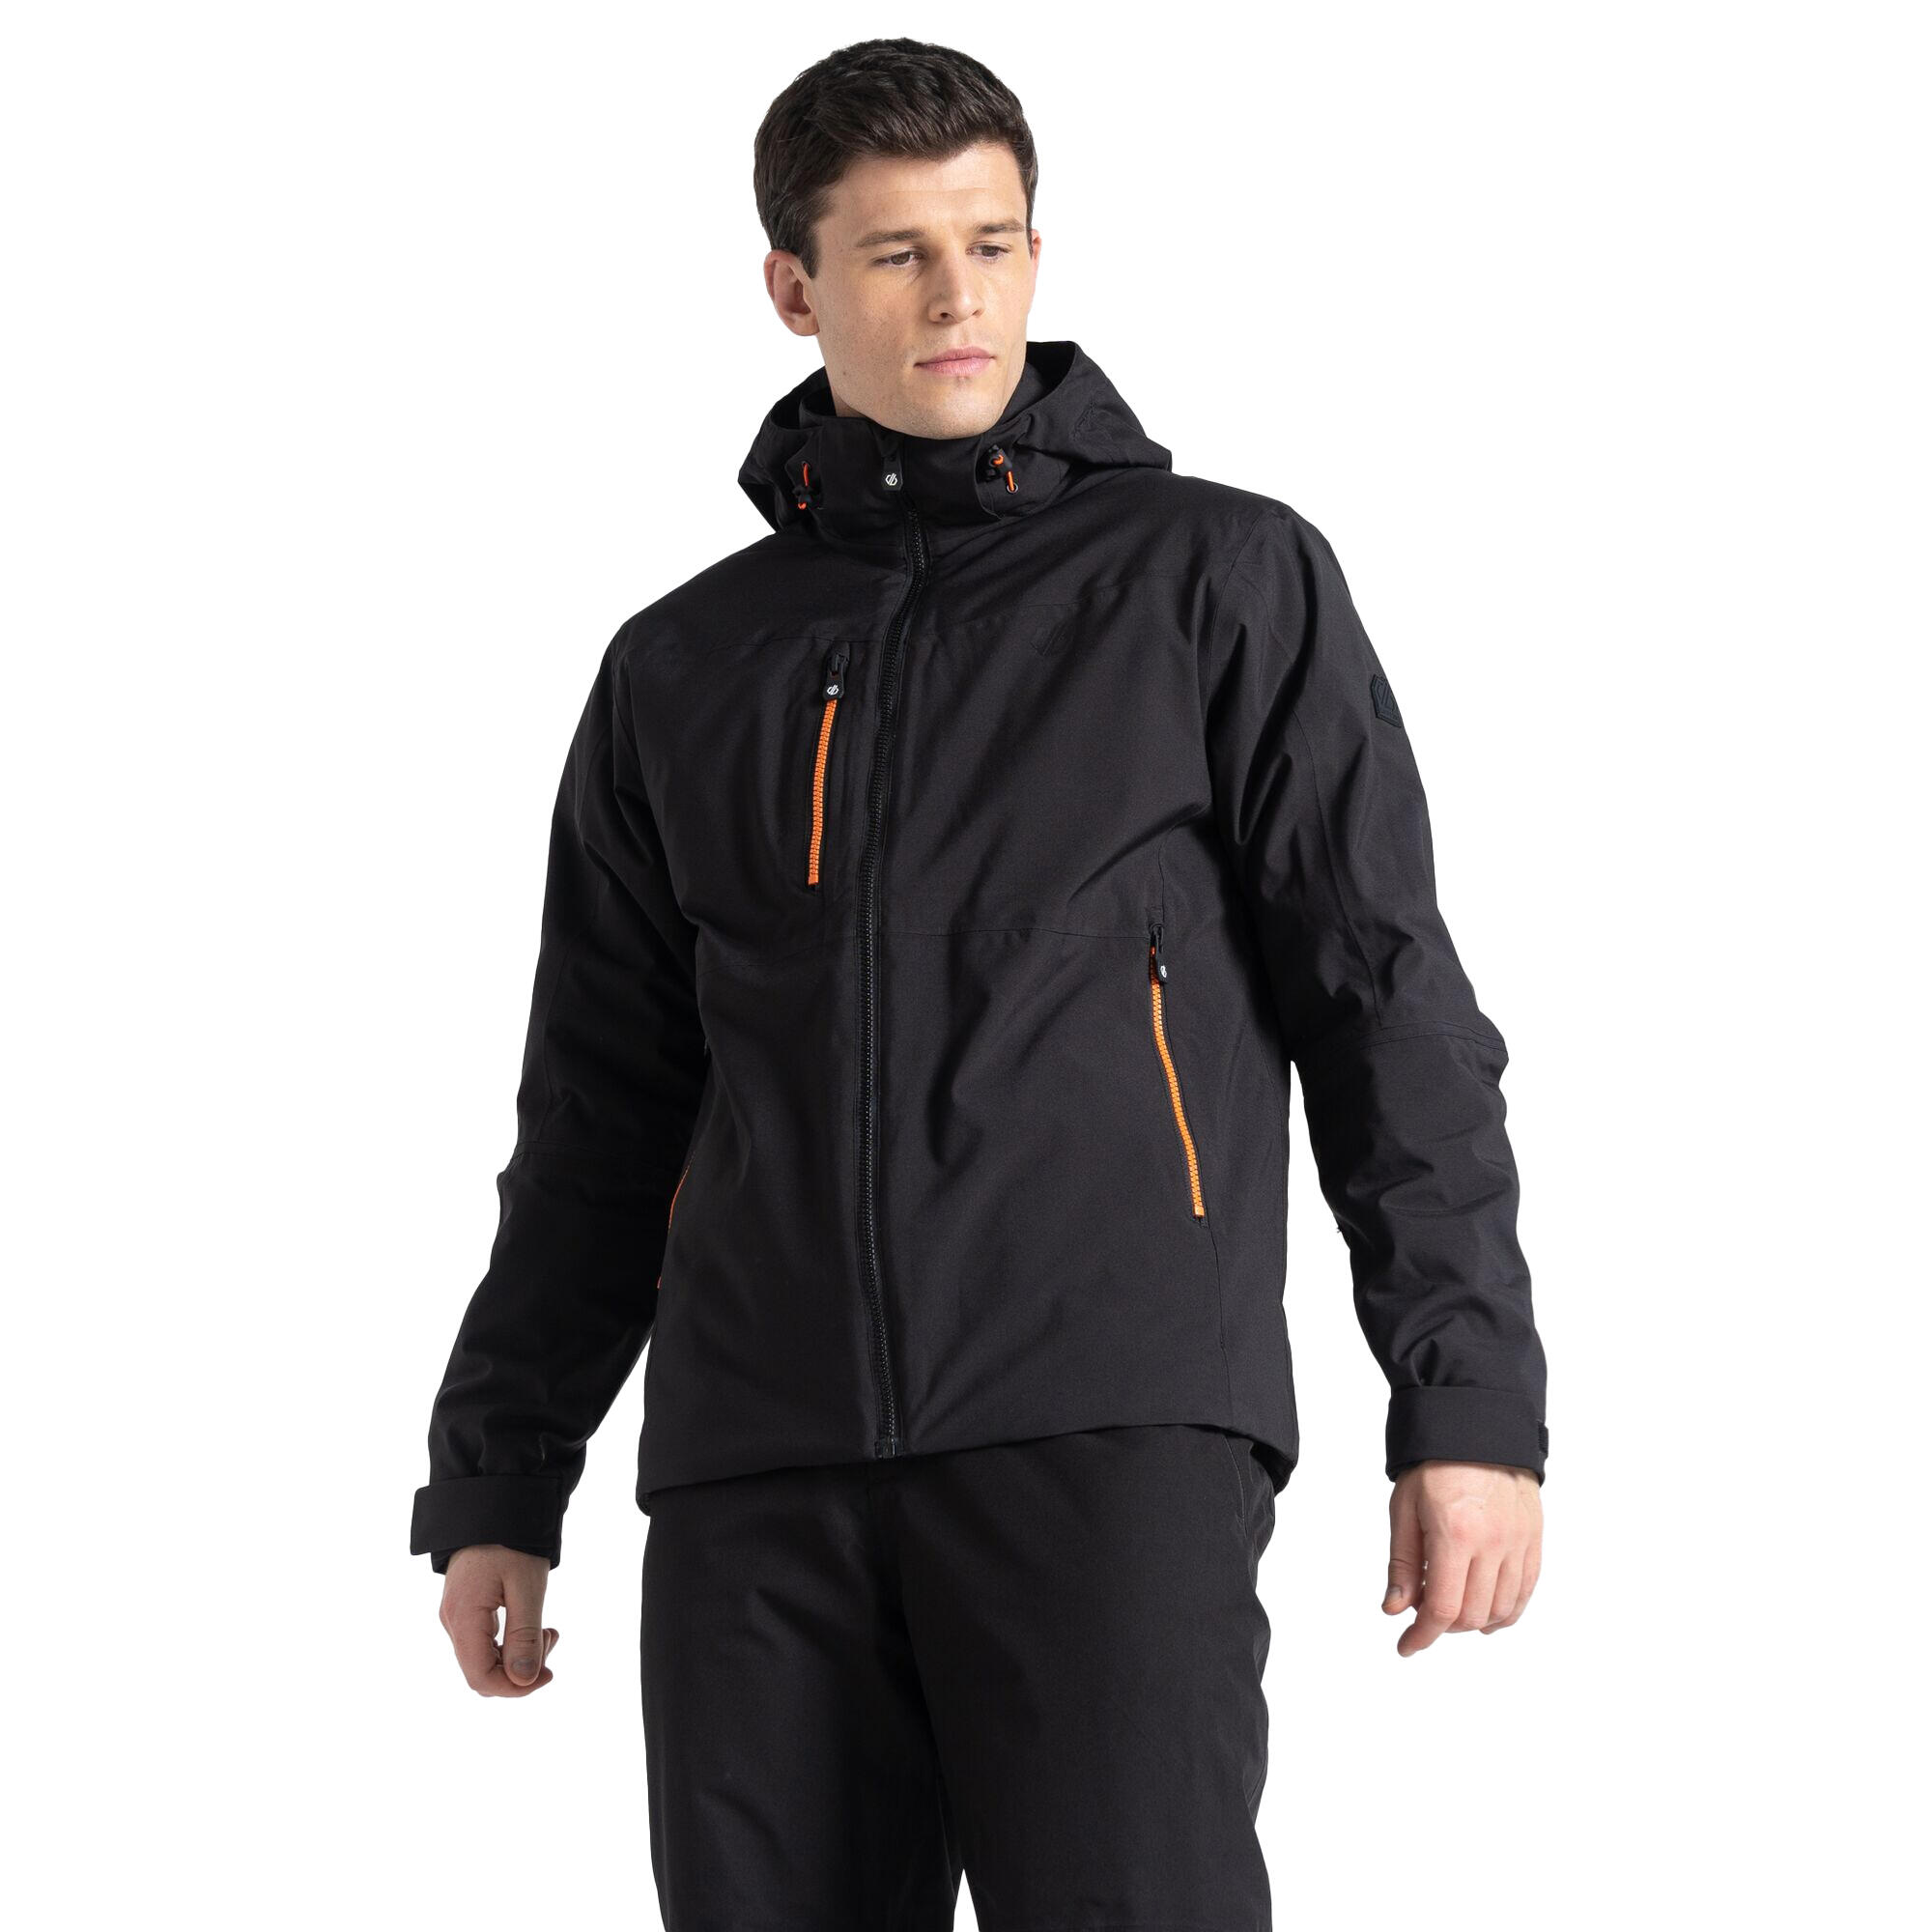 Mens Eagle Waterproof Insulated Ski Jacket (Black) 4/5